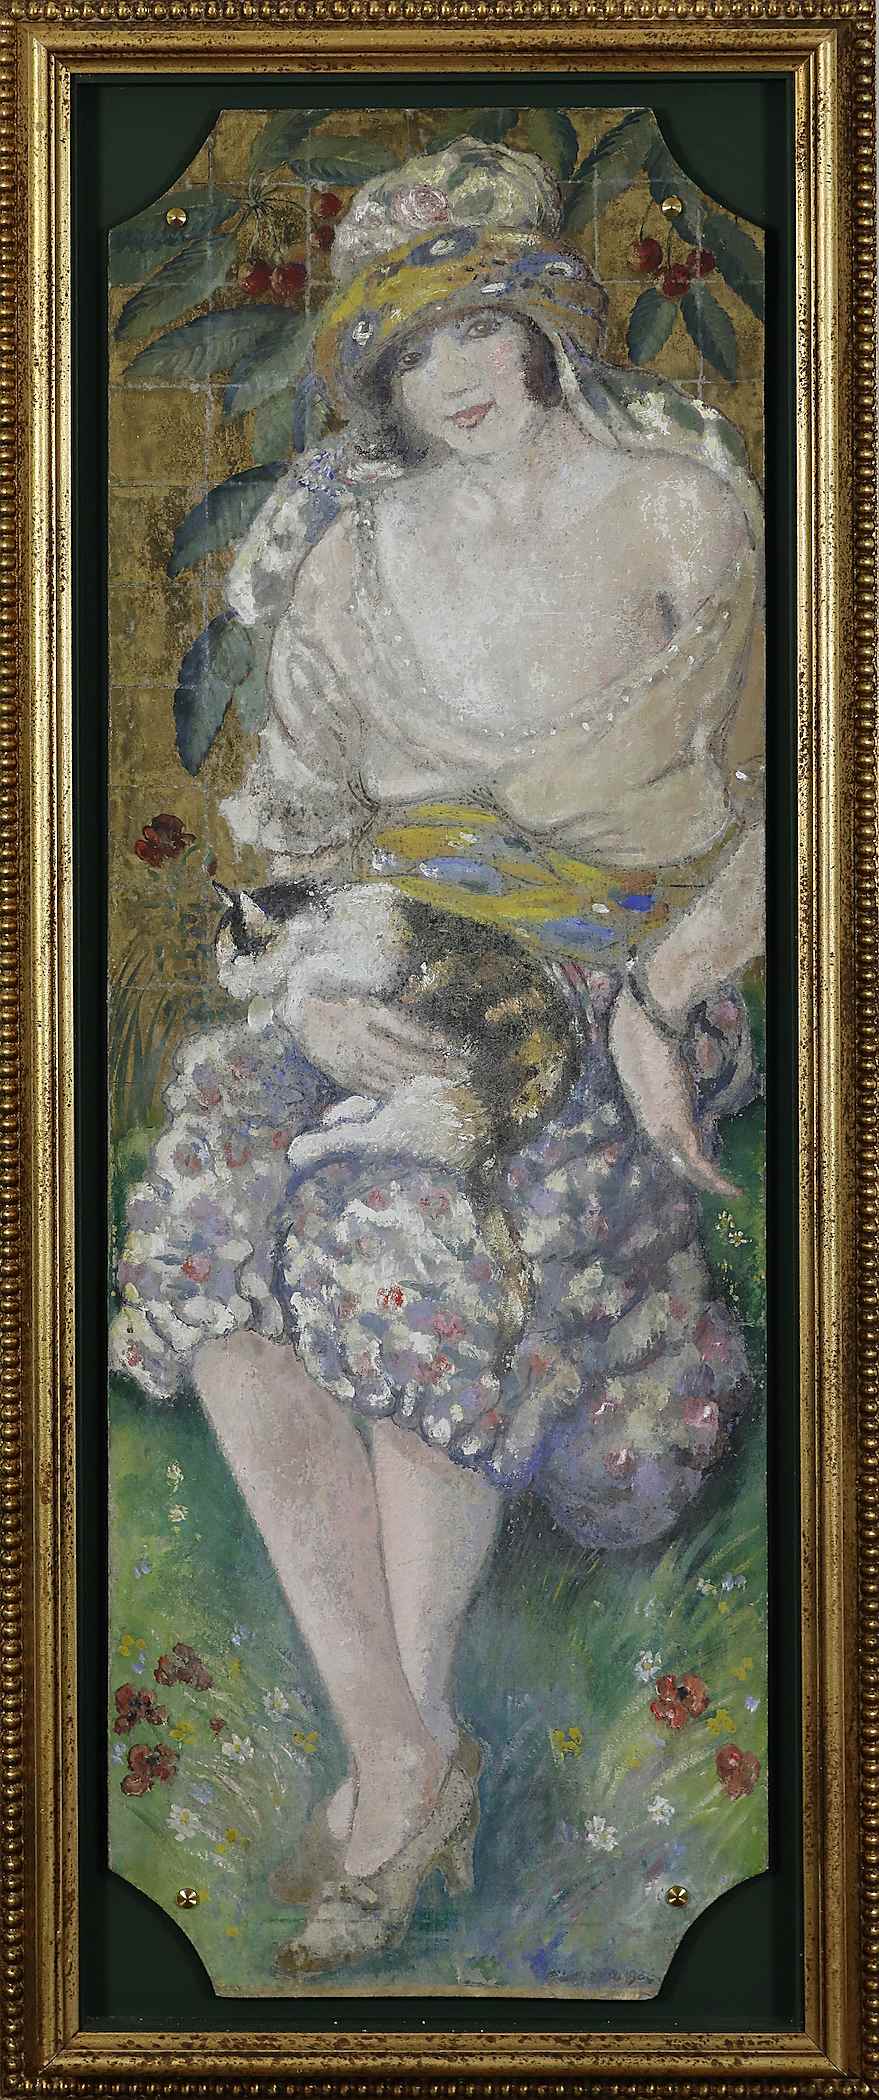 L'Orientale au Chat - Georges Manzana Pissarro (1871 - 1961)